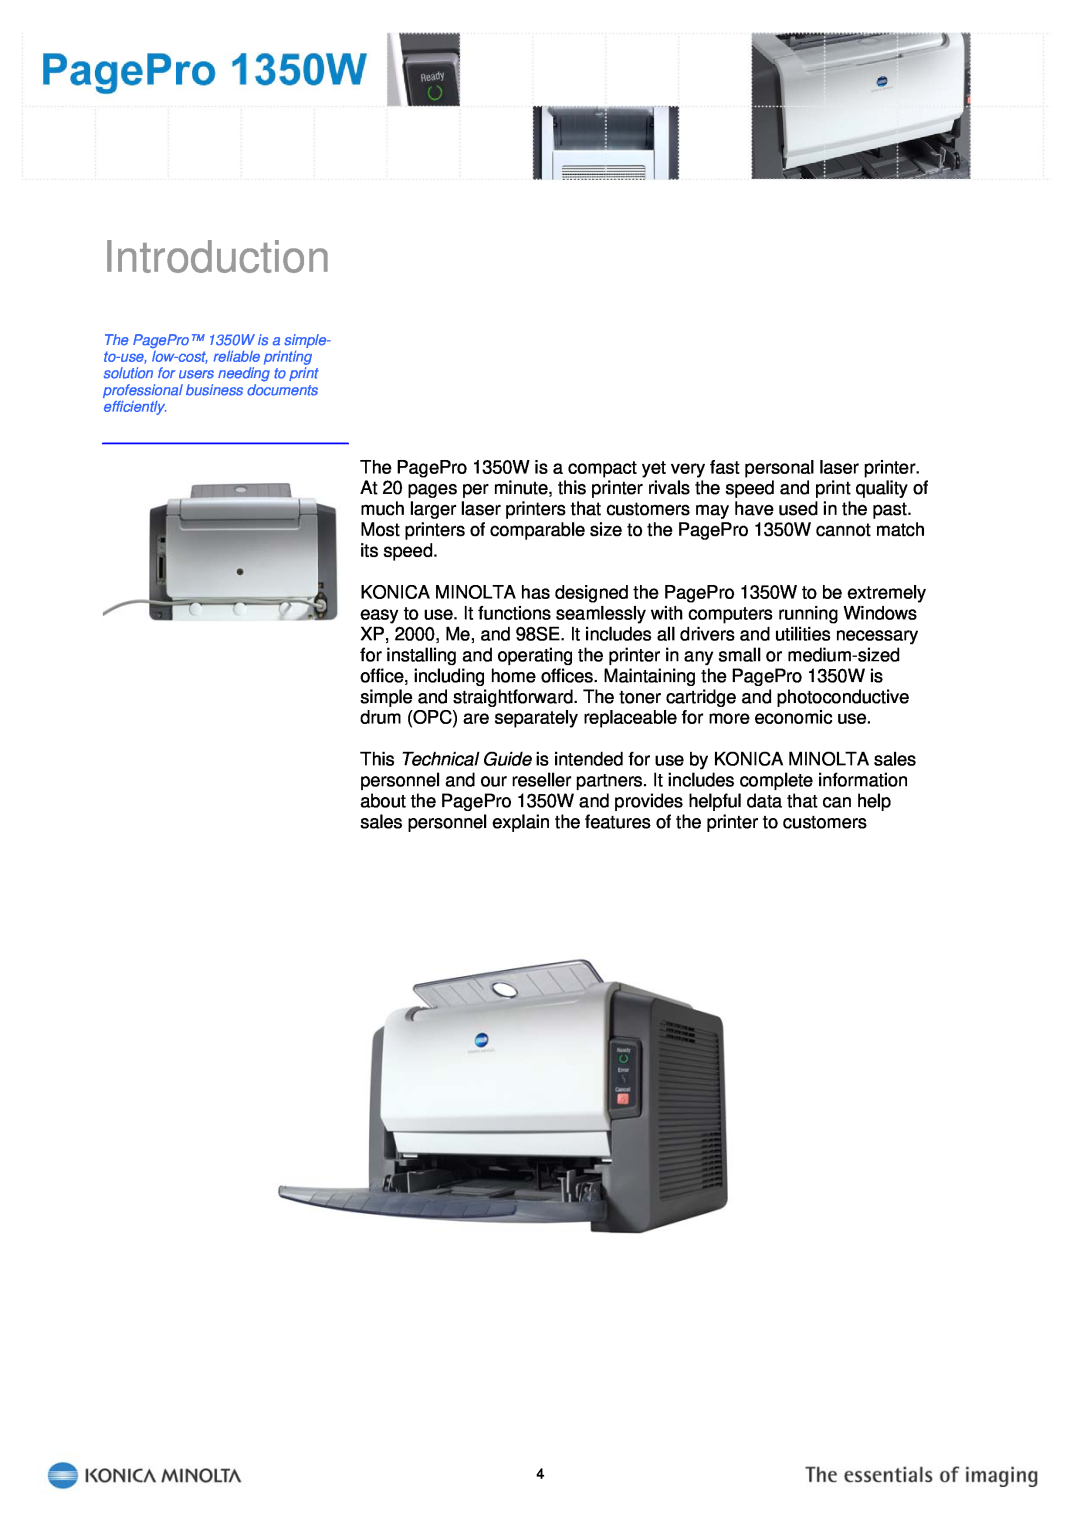 Konica Minolta PagePro 1350W manual Introduction 